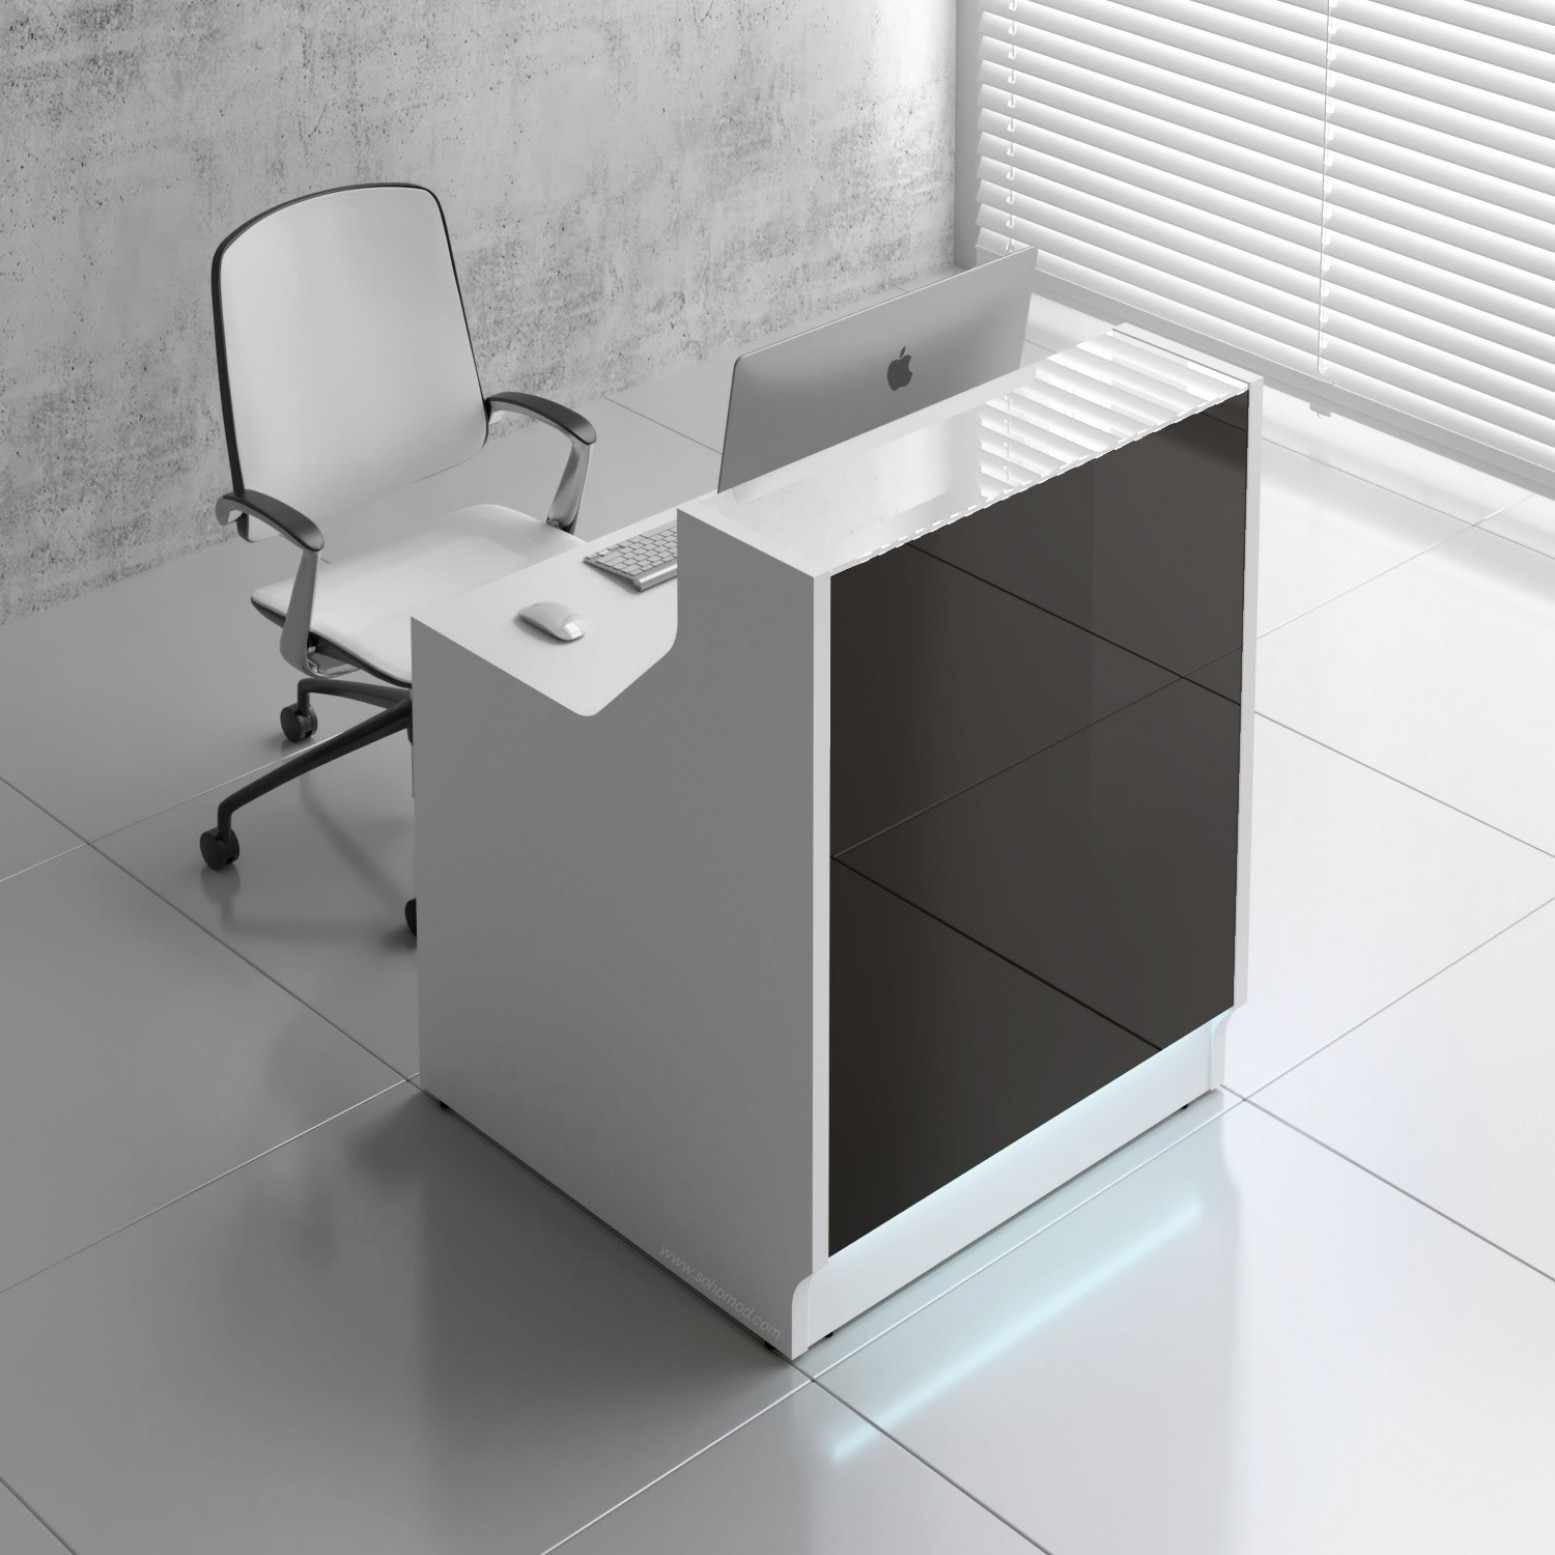 Linea lin13 reception desk black buy online at best price